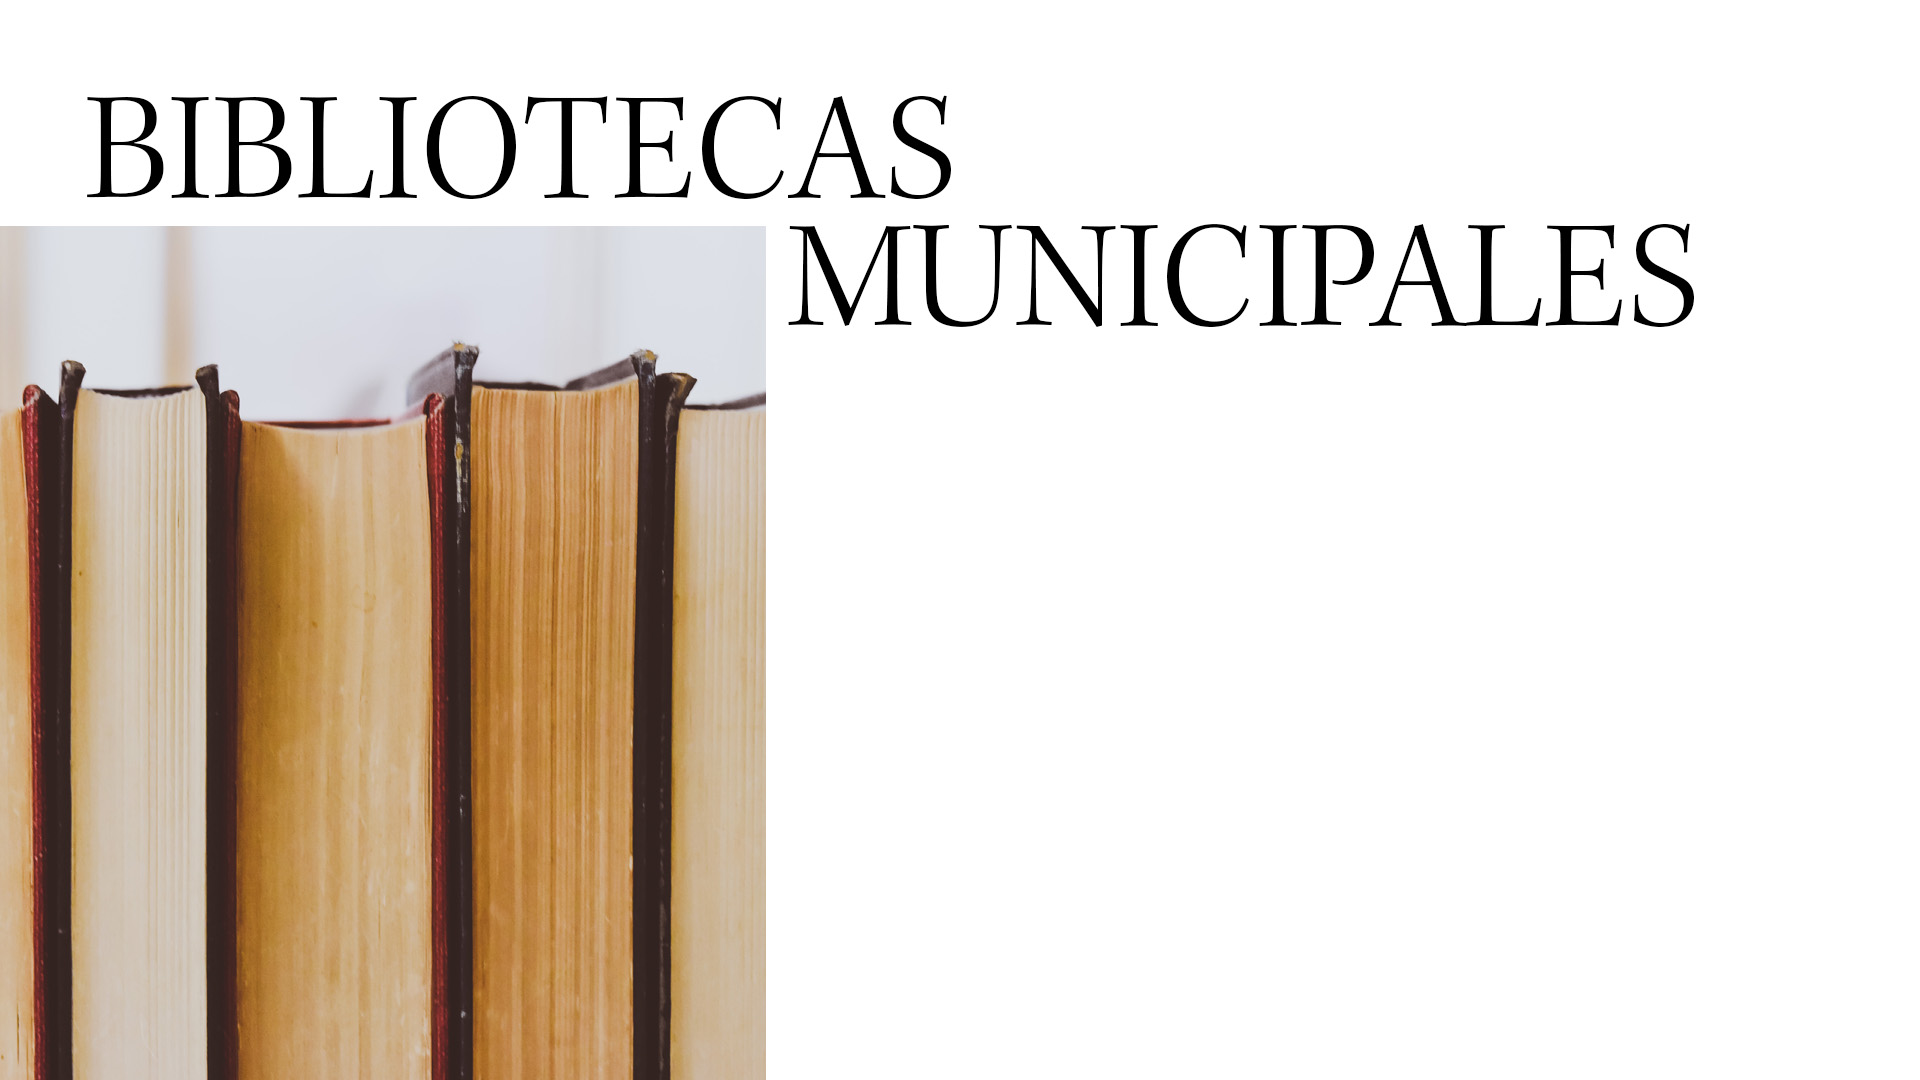 Bibliotecas Municipales: programación